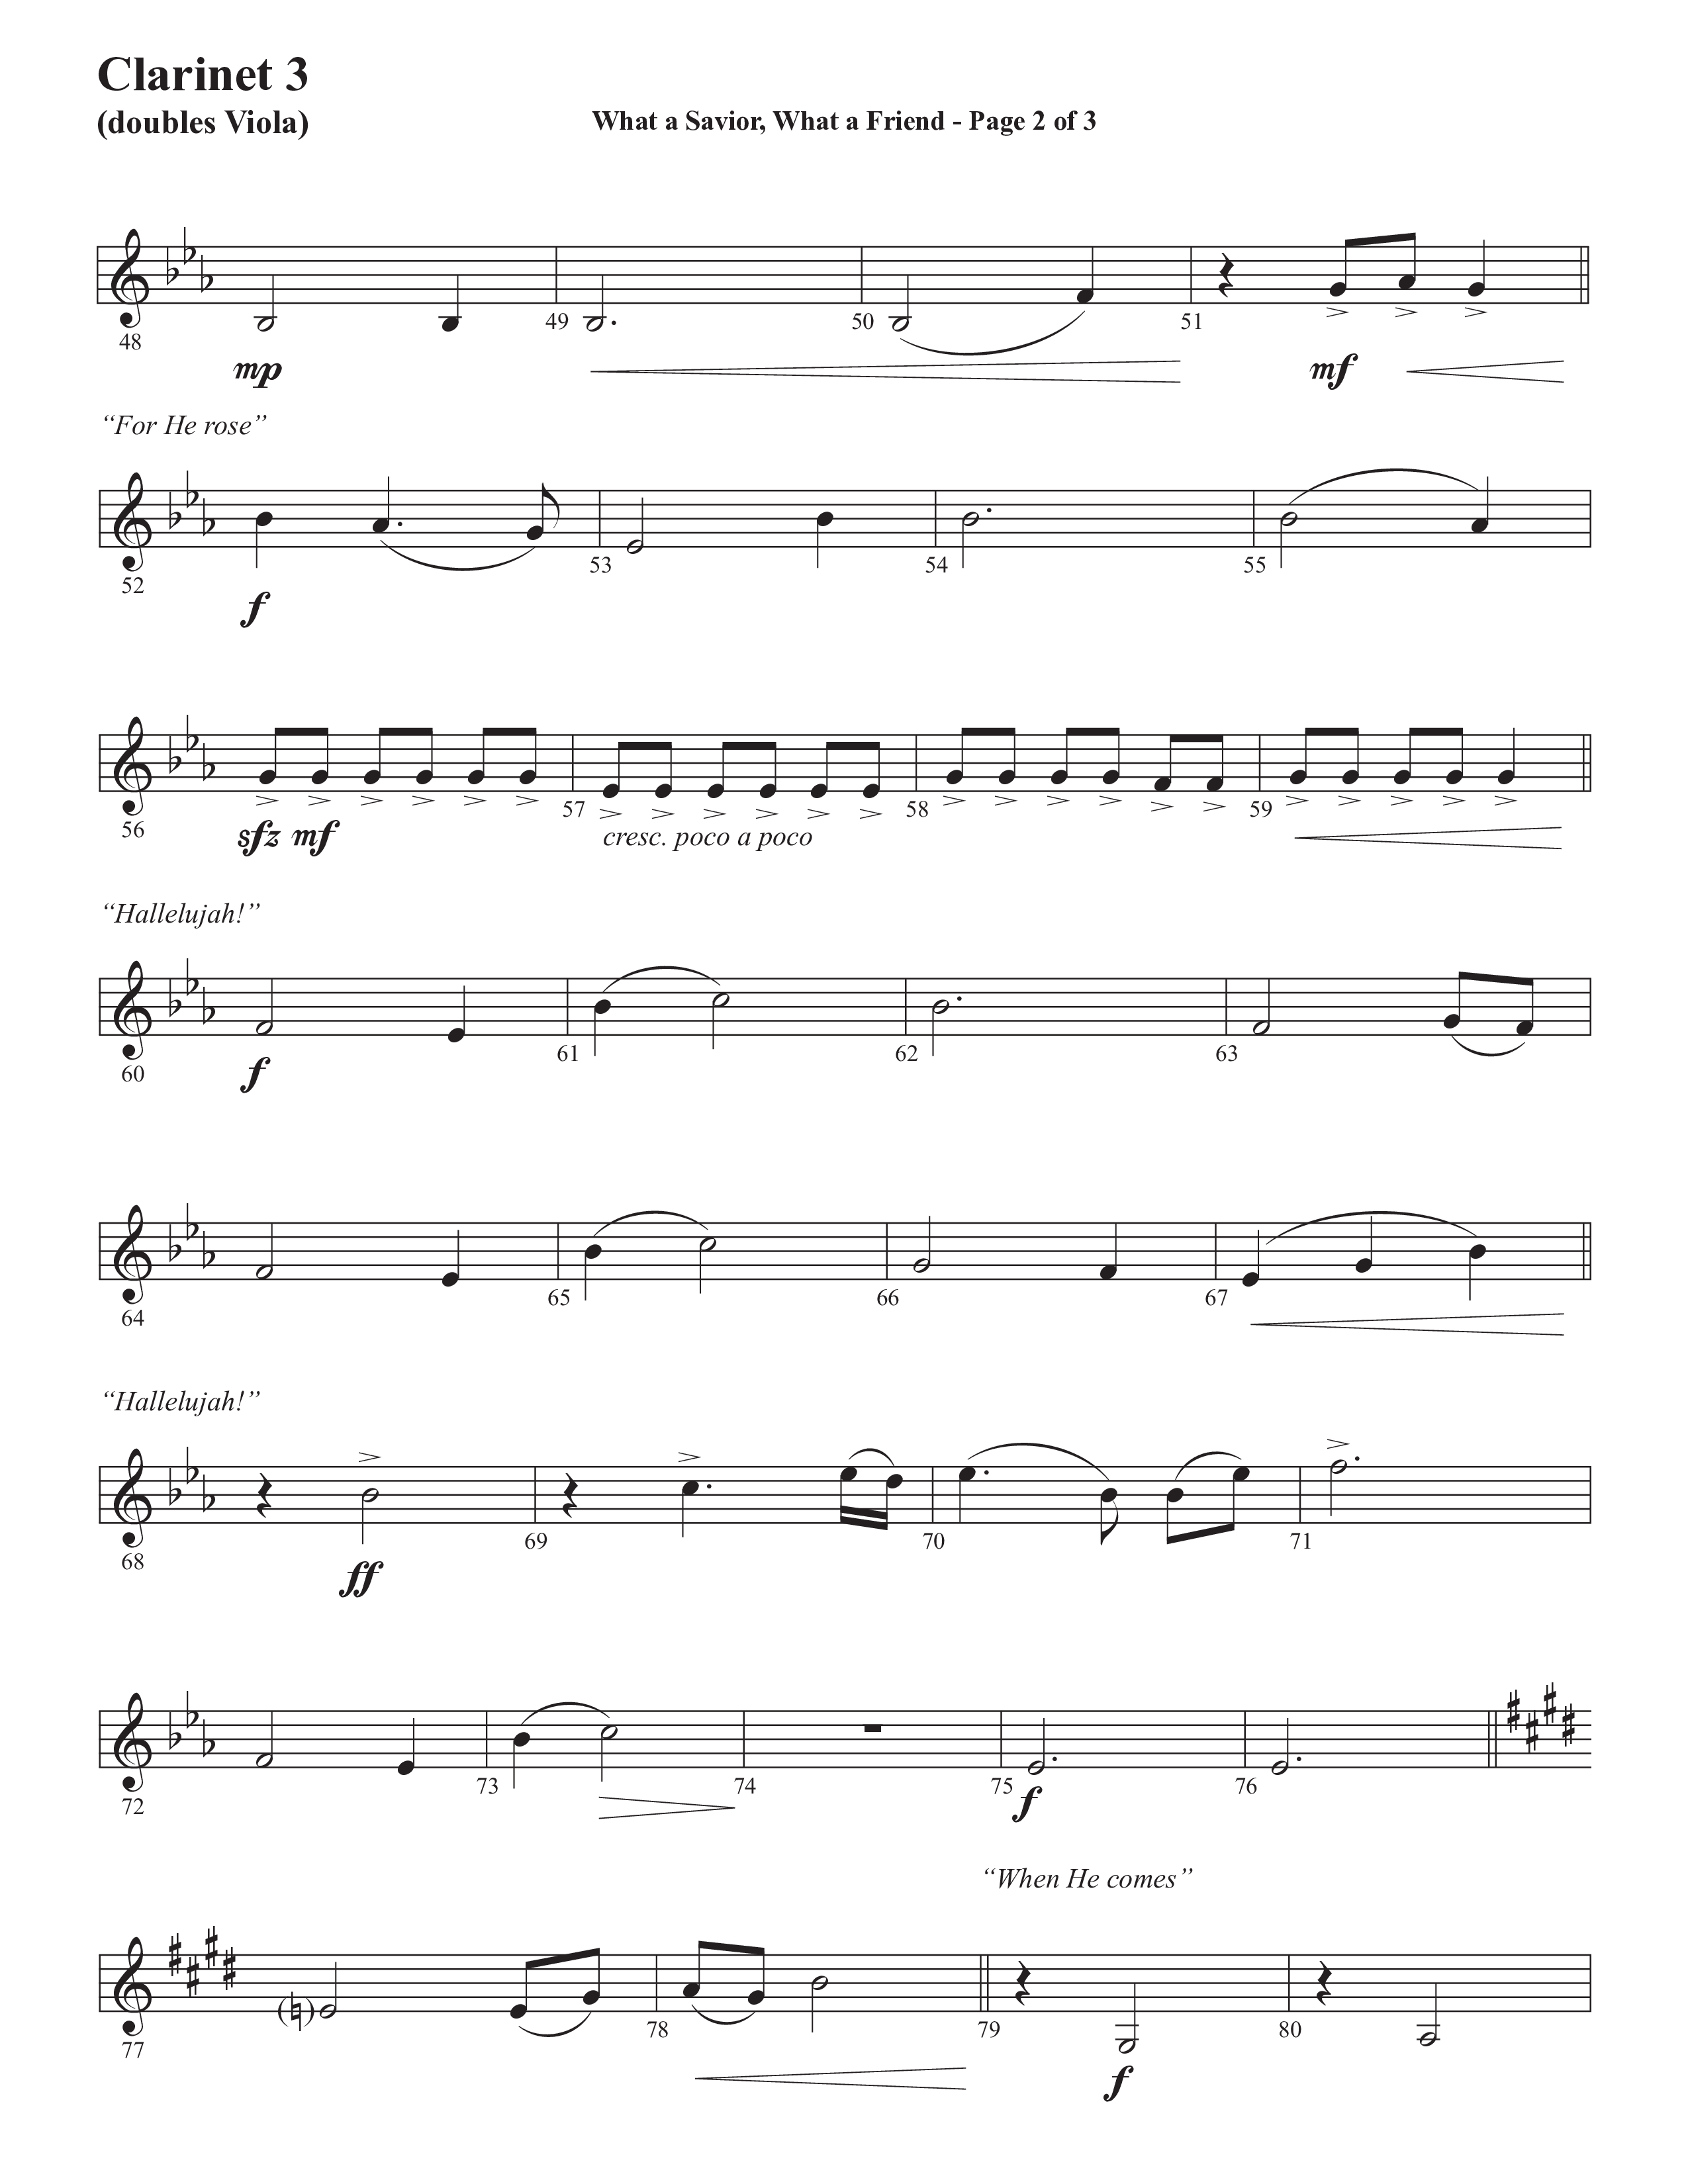 What A Savior What A Friend (Choral Anthem SATB) Clarinet 3 (Semsen Music / Arr. John Bolin / Orch. David Shipps)